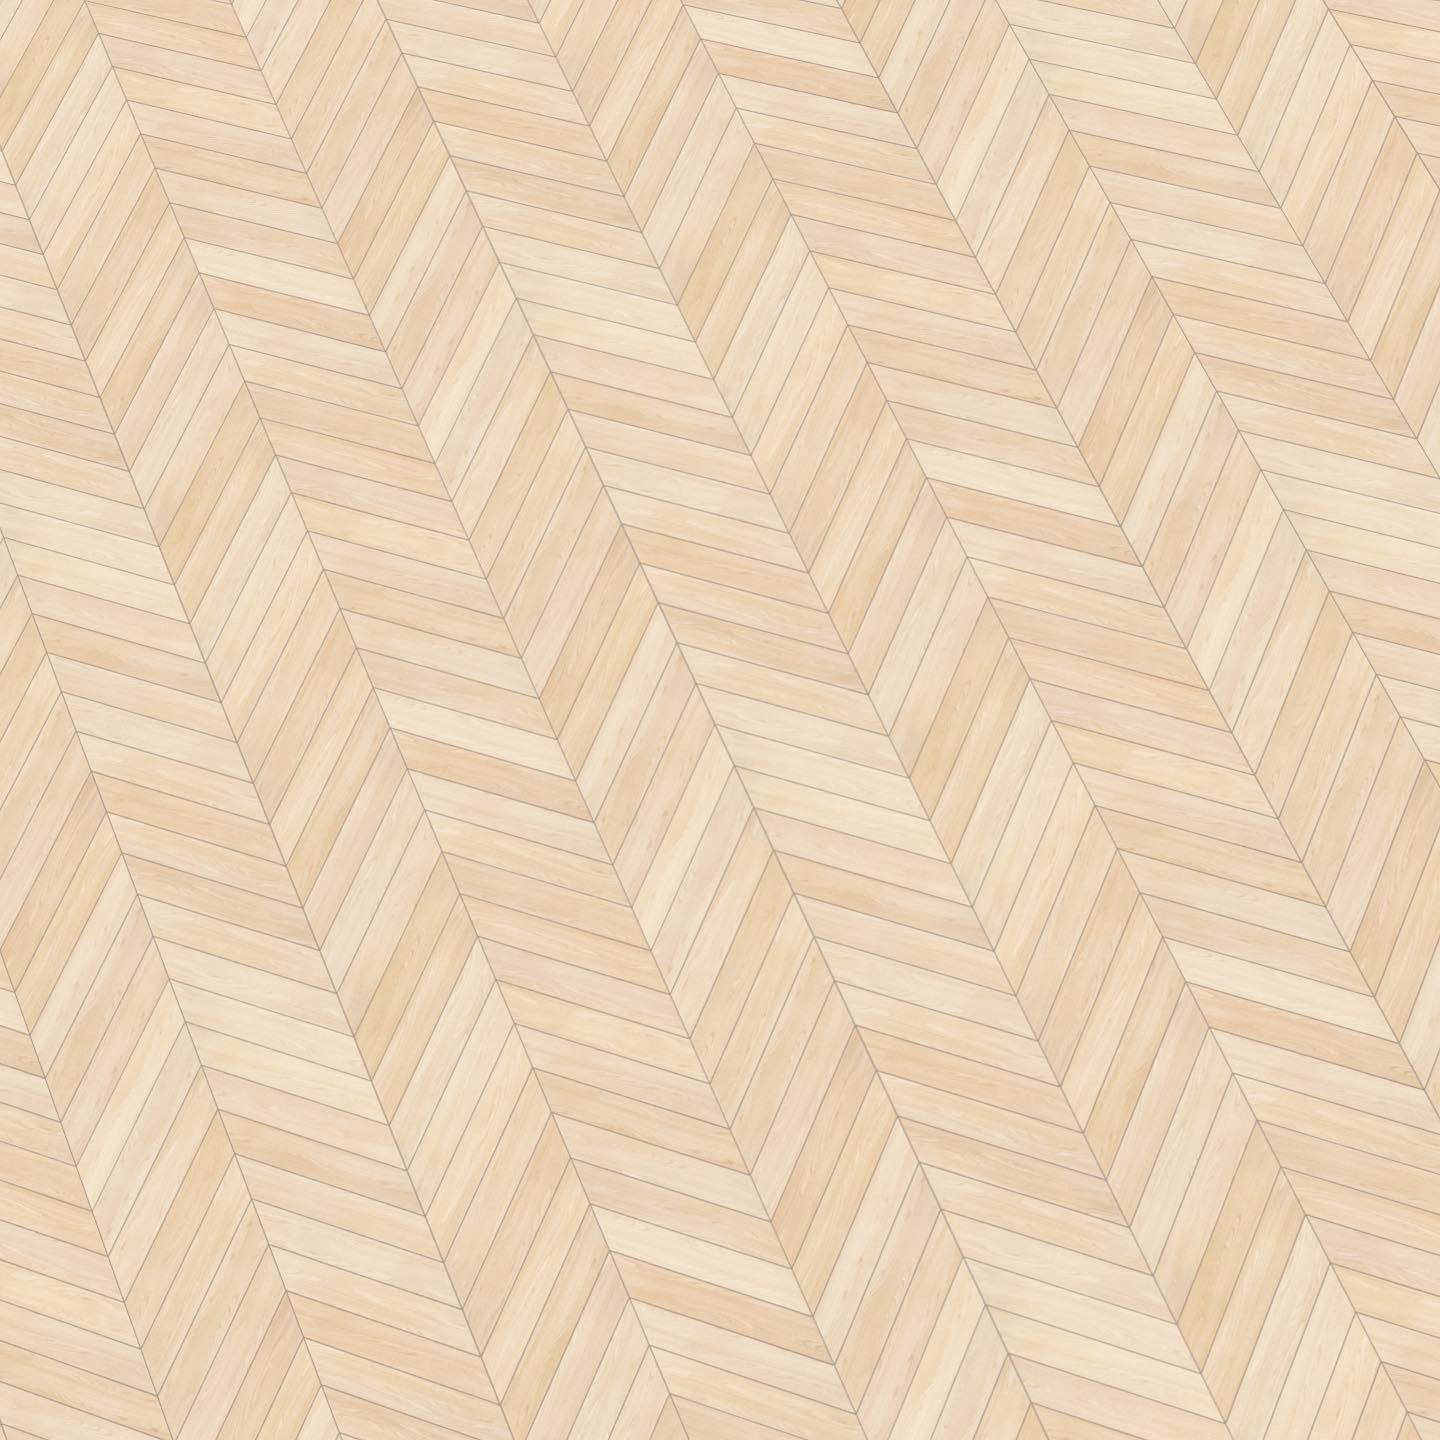 Light Herringbone Wood Paper Flooring